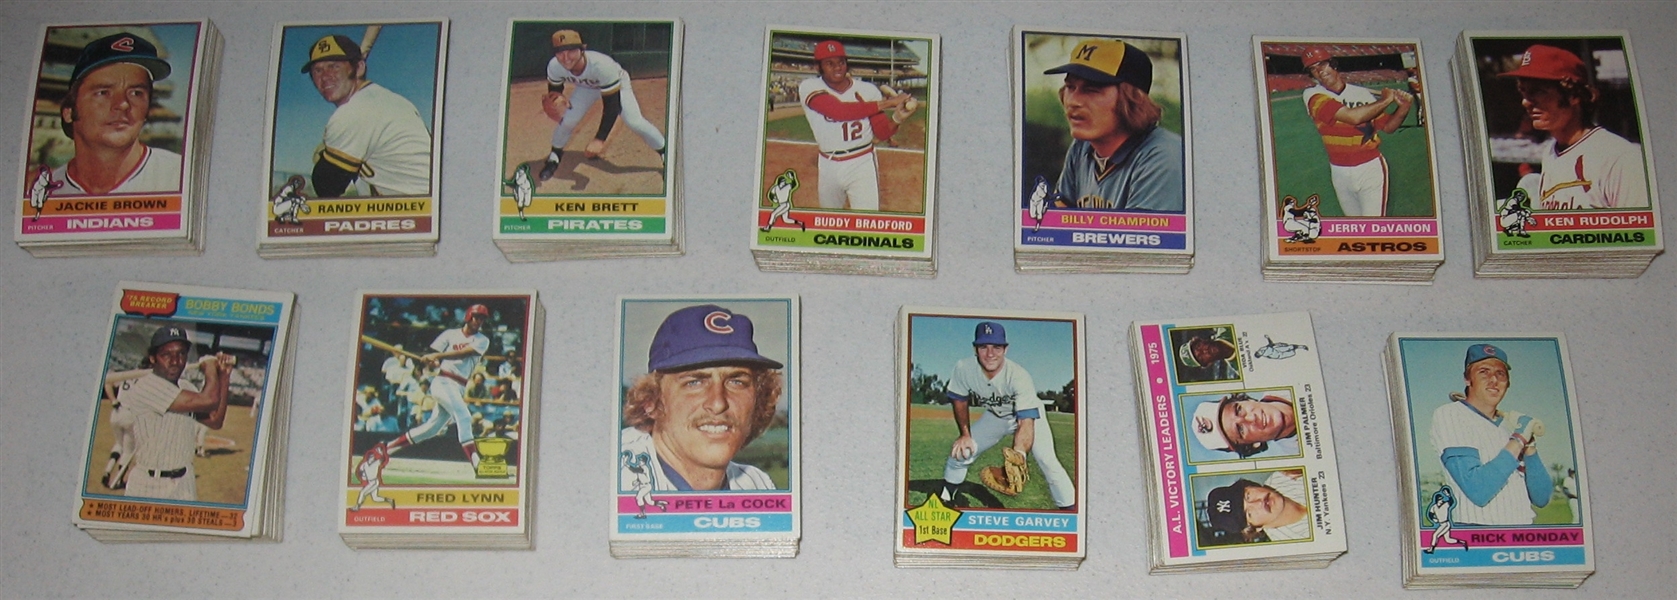 1976 Topps Baseball Complete Set (660) W/ Eckersley, Rookie